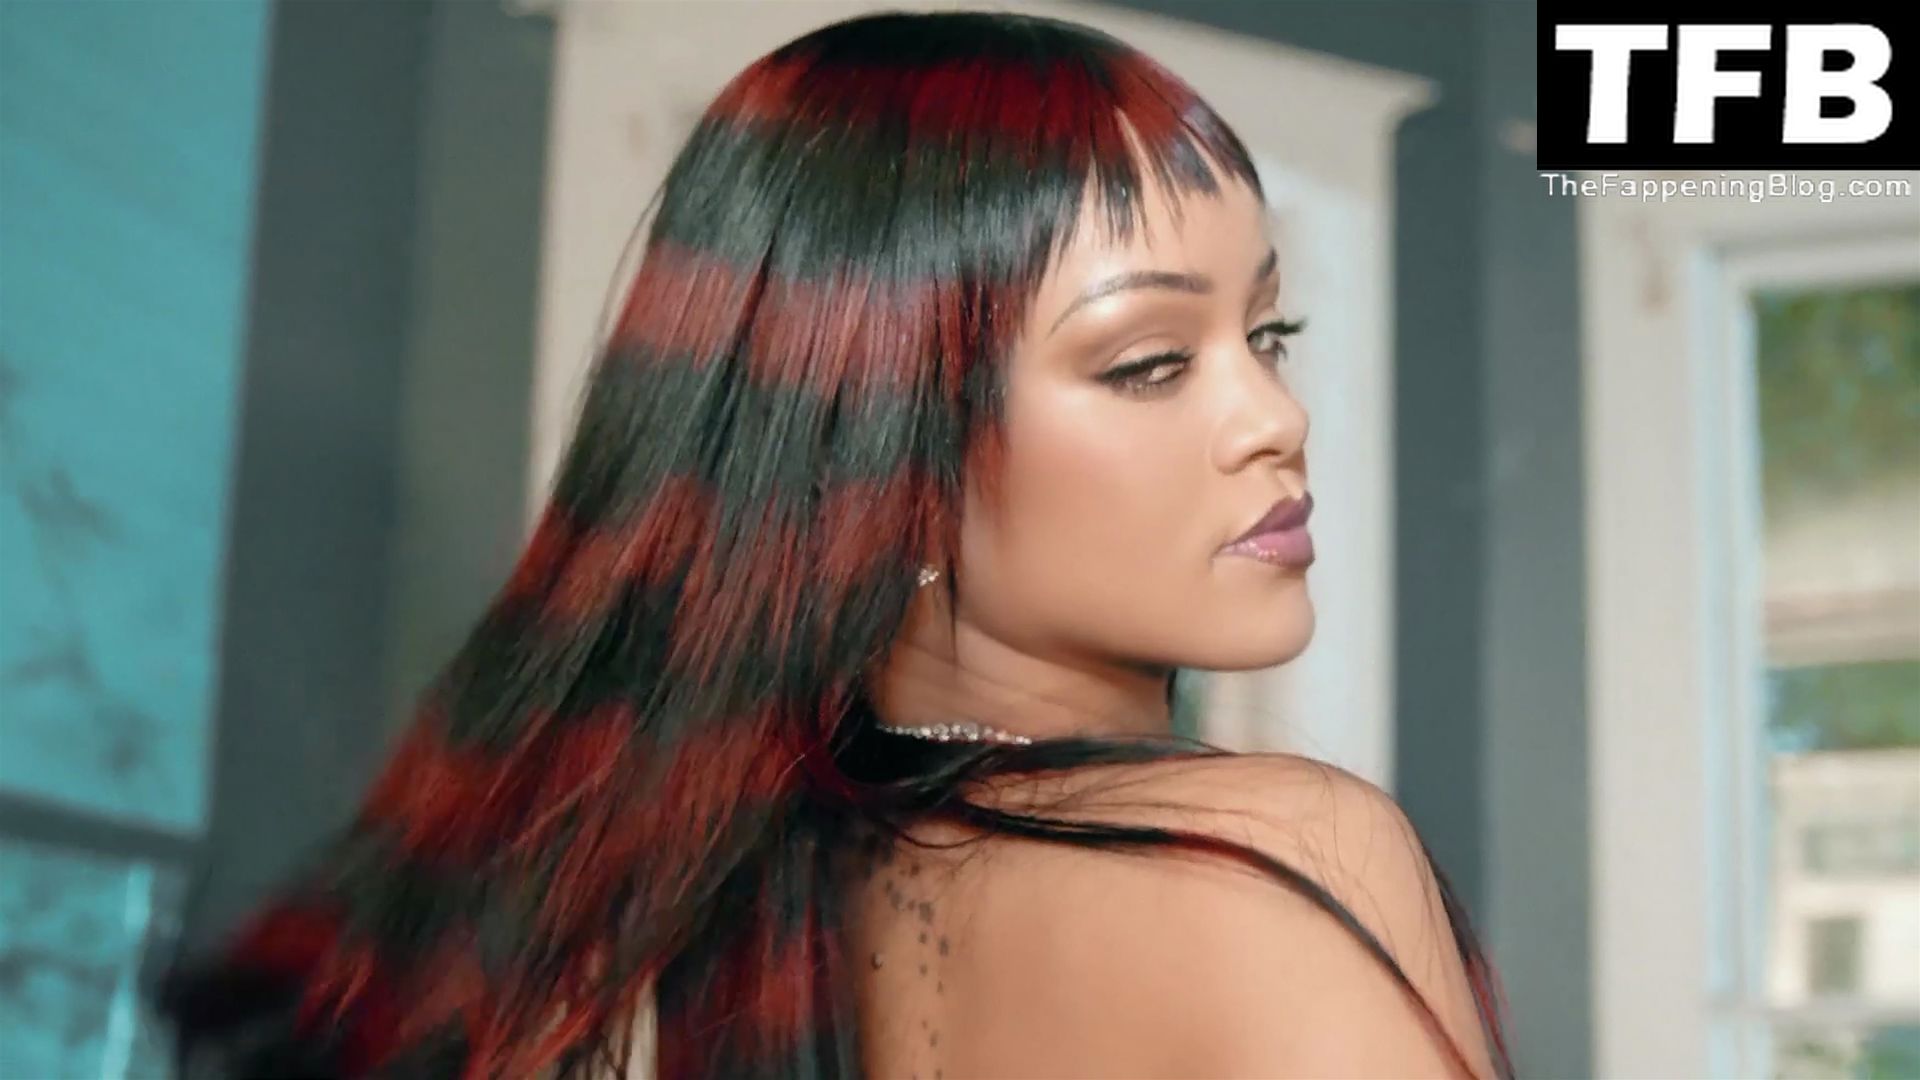 Rihanna-Sexy-Love-On-the-Edge-The-Fappening-Blog-43.jpg